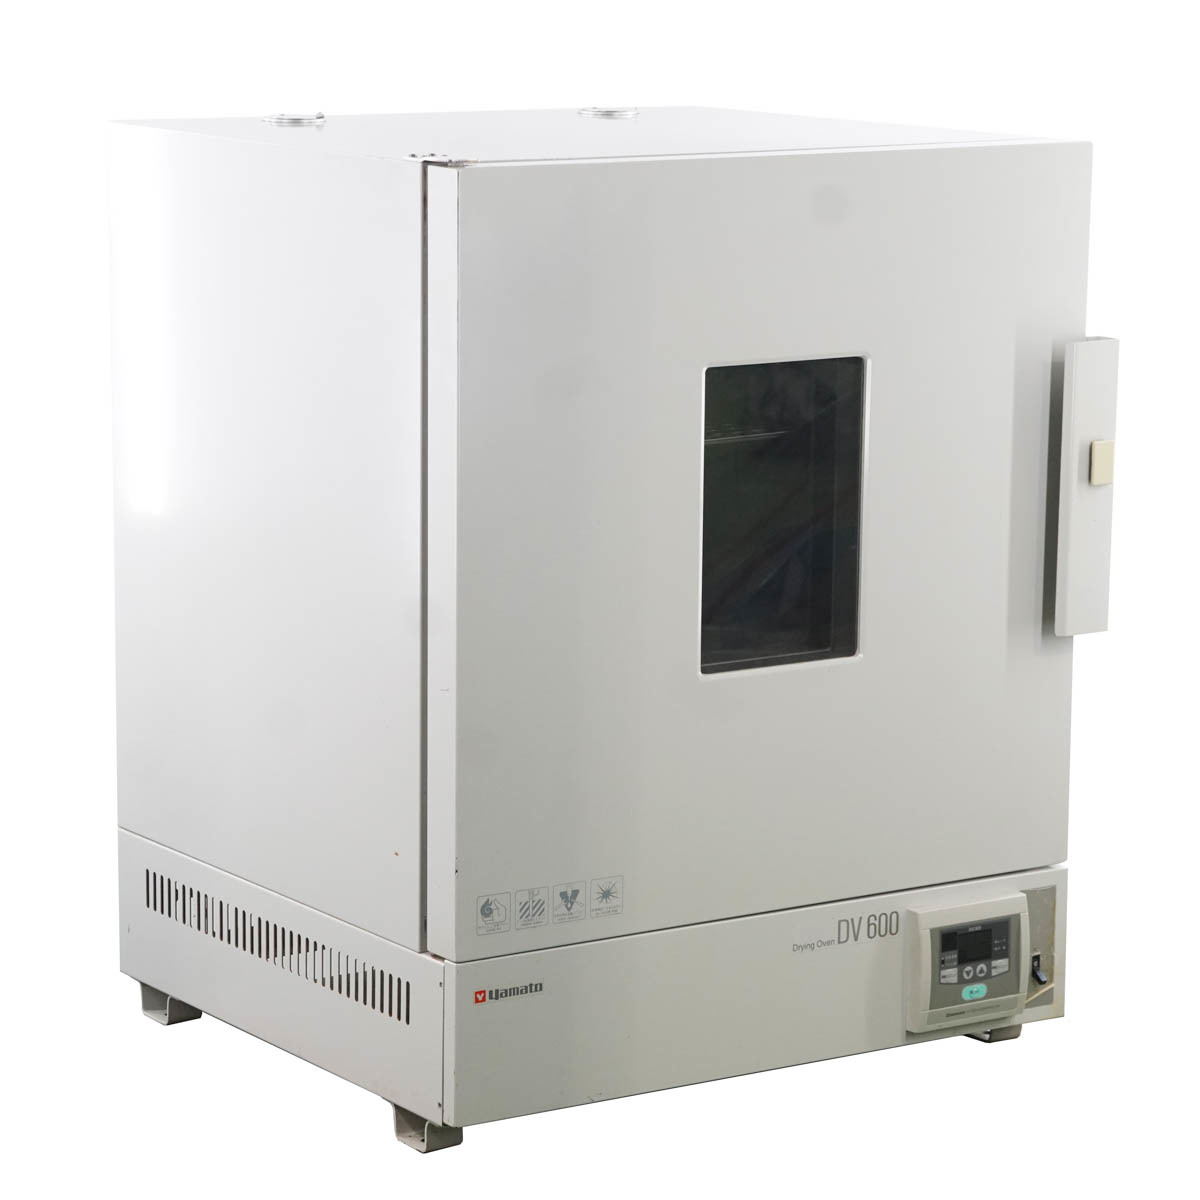 新製品情報も満載 DV yamato 8日保証 [DW]USED 600 定温乾燥機[ST03926-0006] Oven Drying DV600 環境測定器